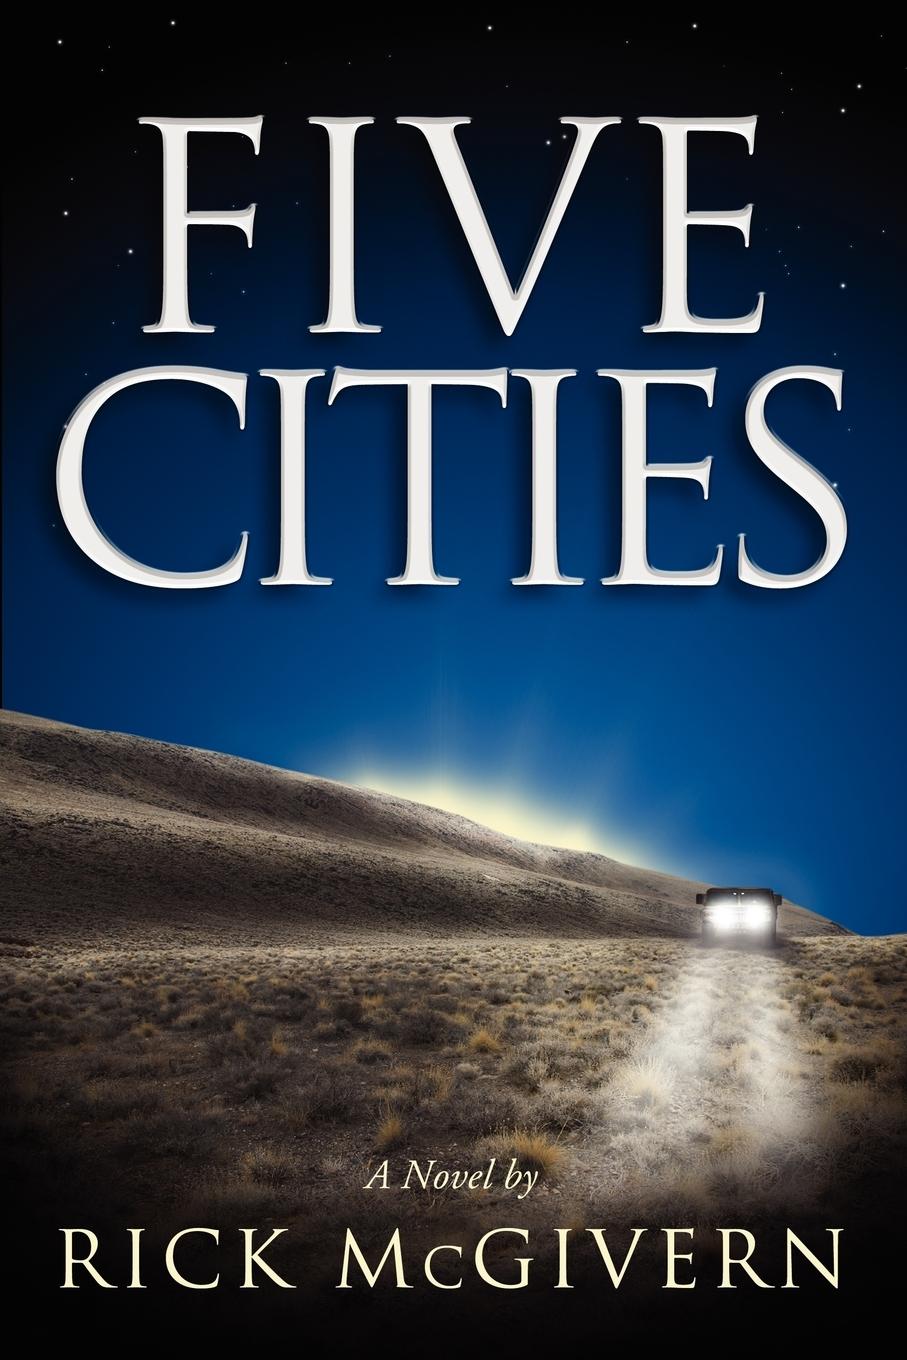 5 Cities - McGivern, Rick